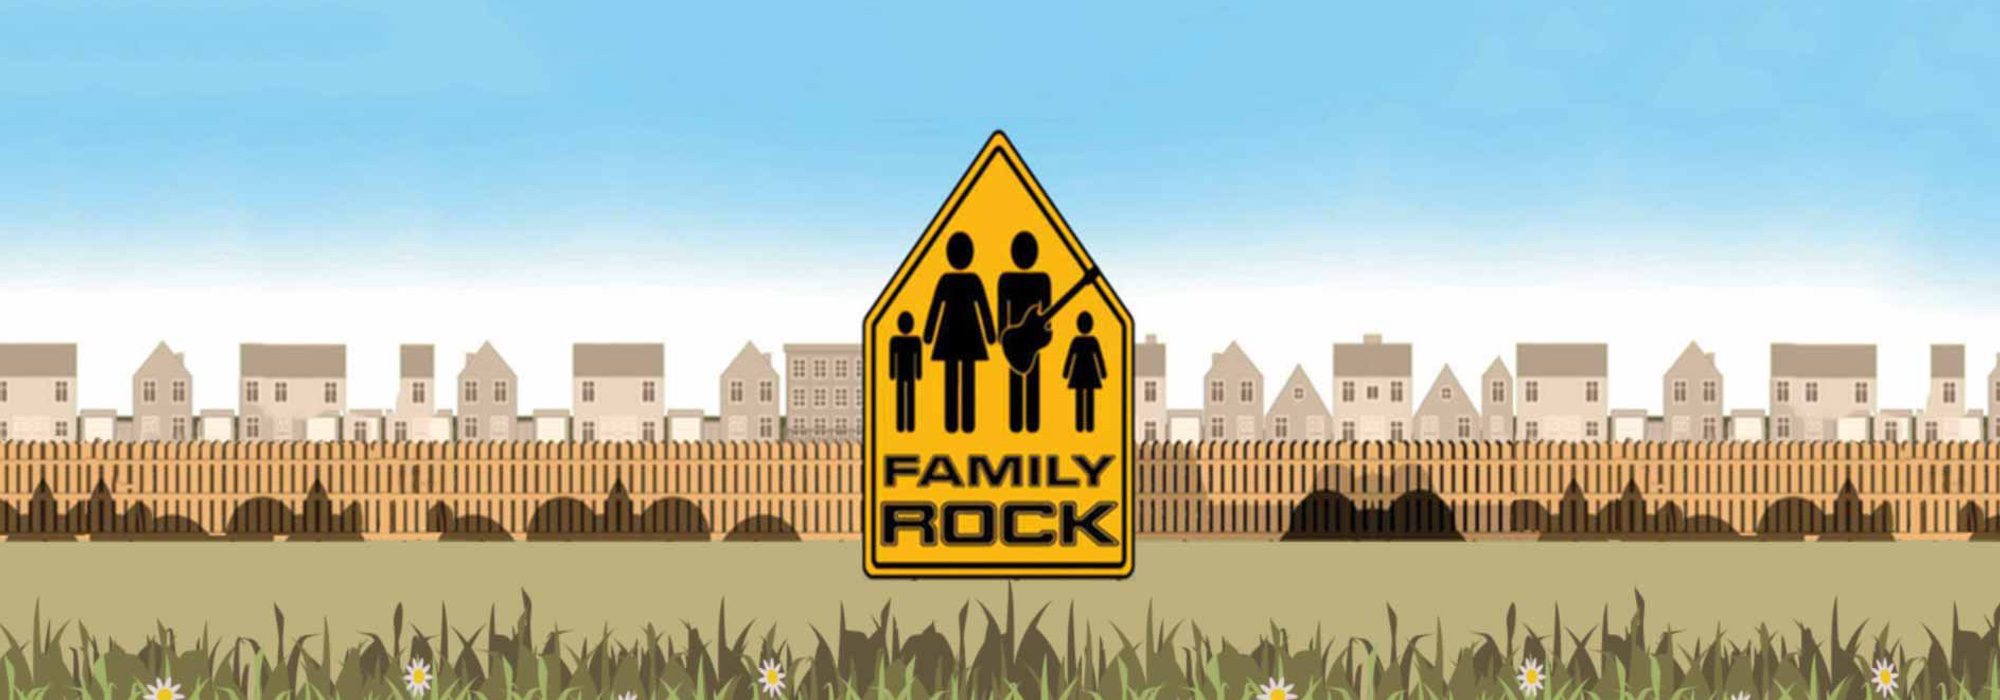 Family rock